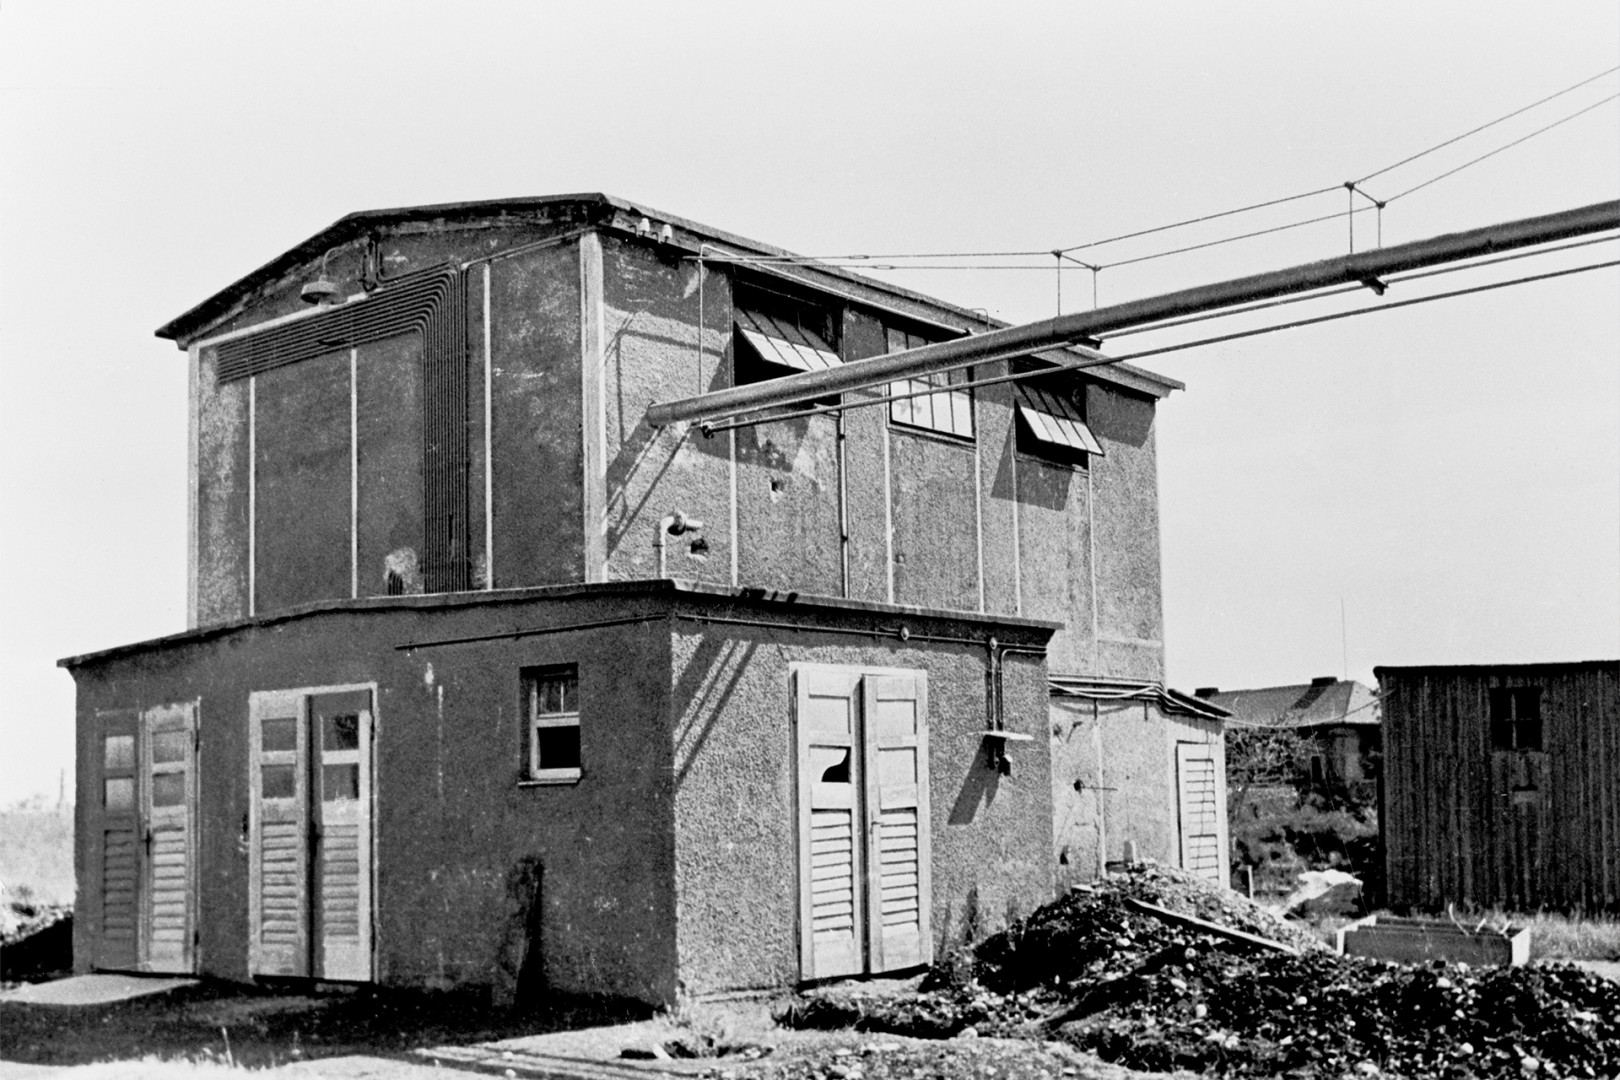 Post-war silane distillation started in the “Salettl” summerhouse